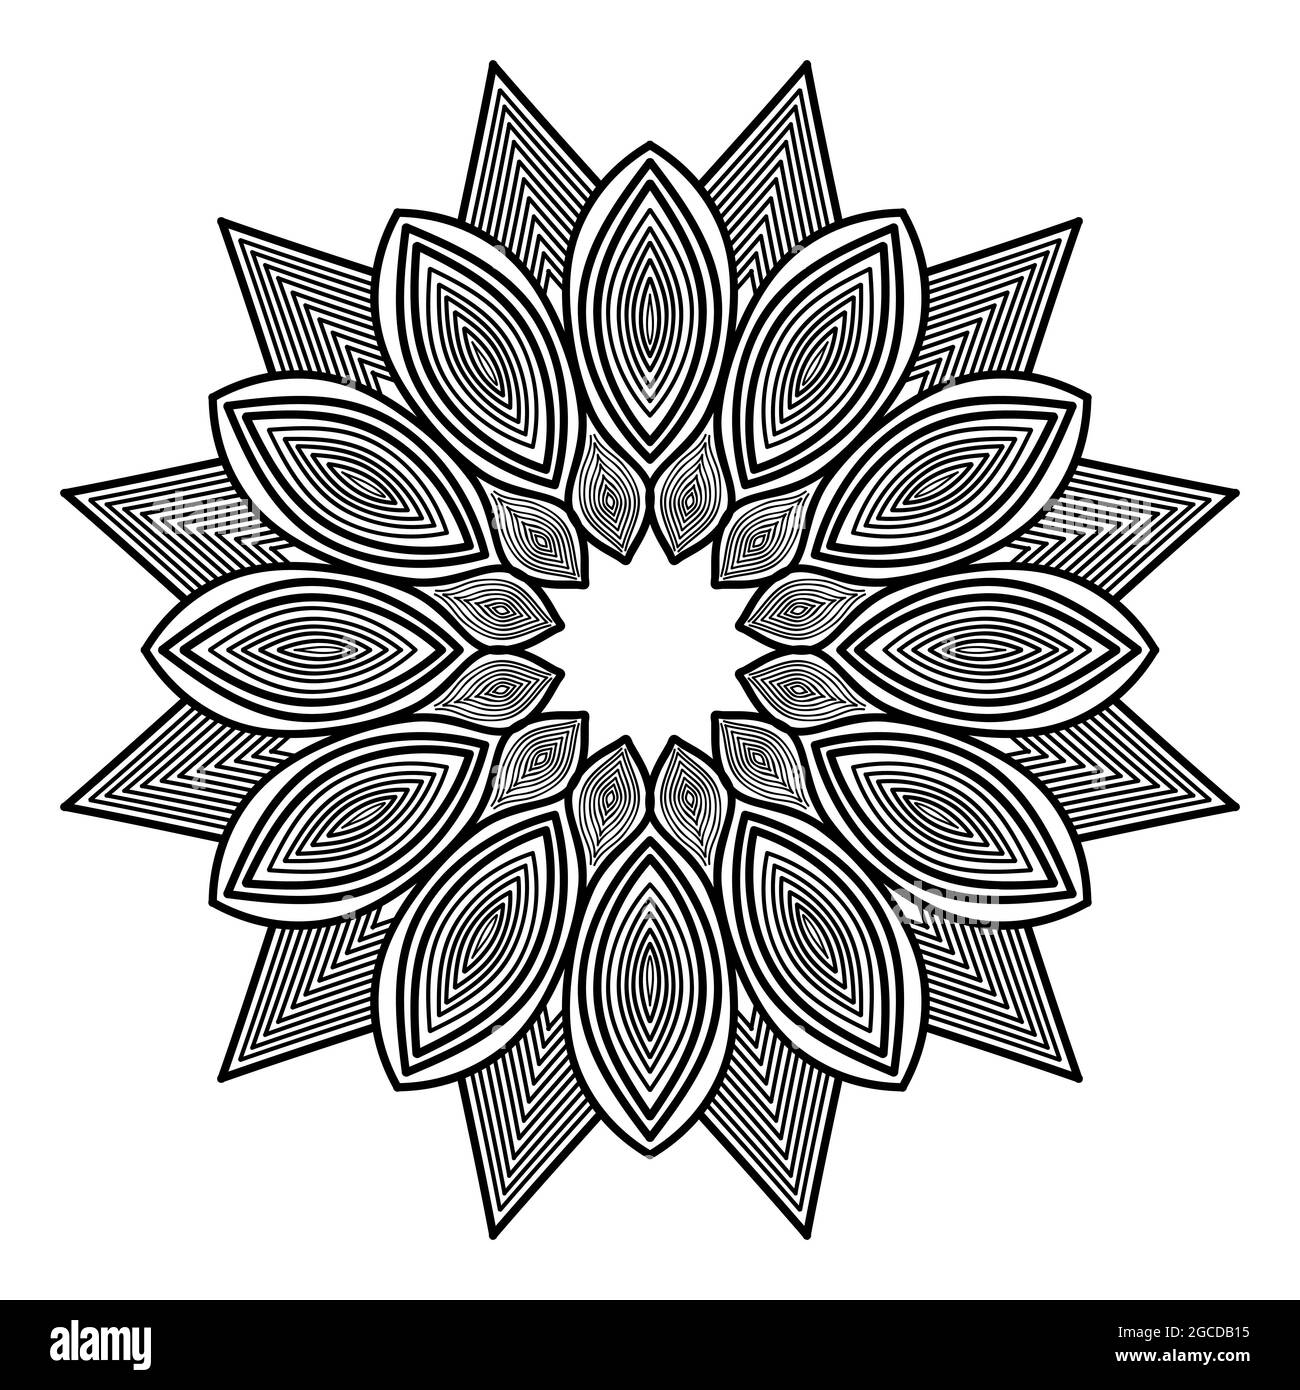 oriental style round pattern illustration of abstract meditation mandala design Stock Vector